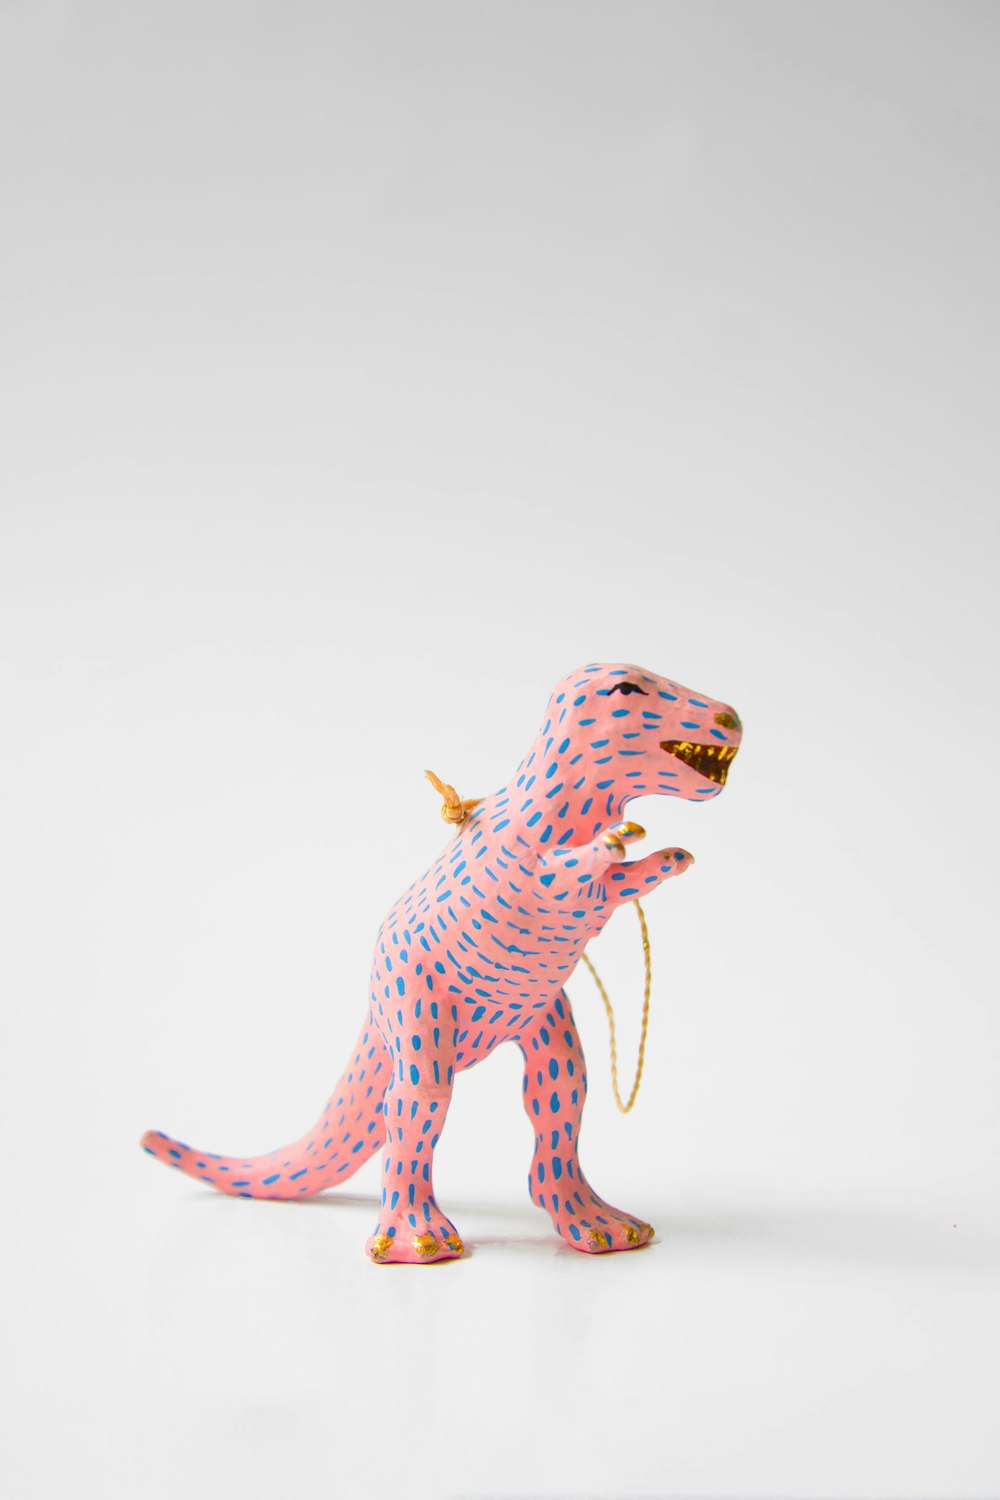 juguete de dinosaurio rosa